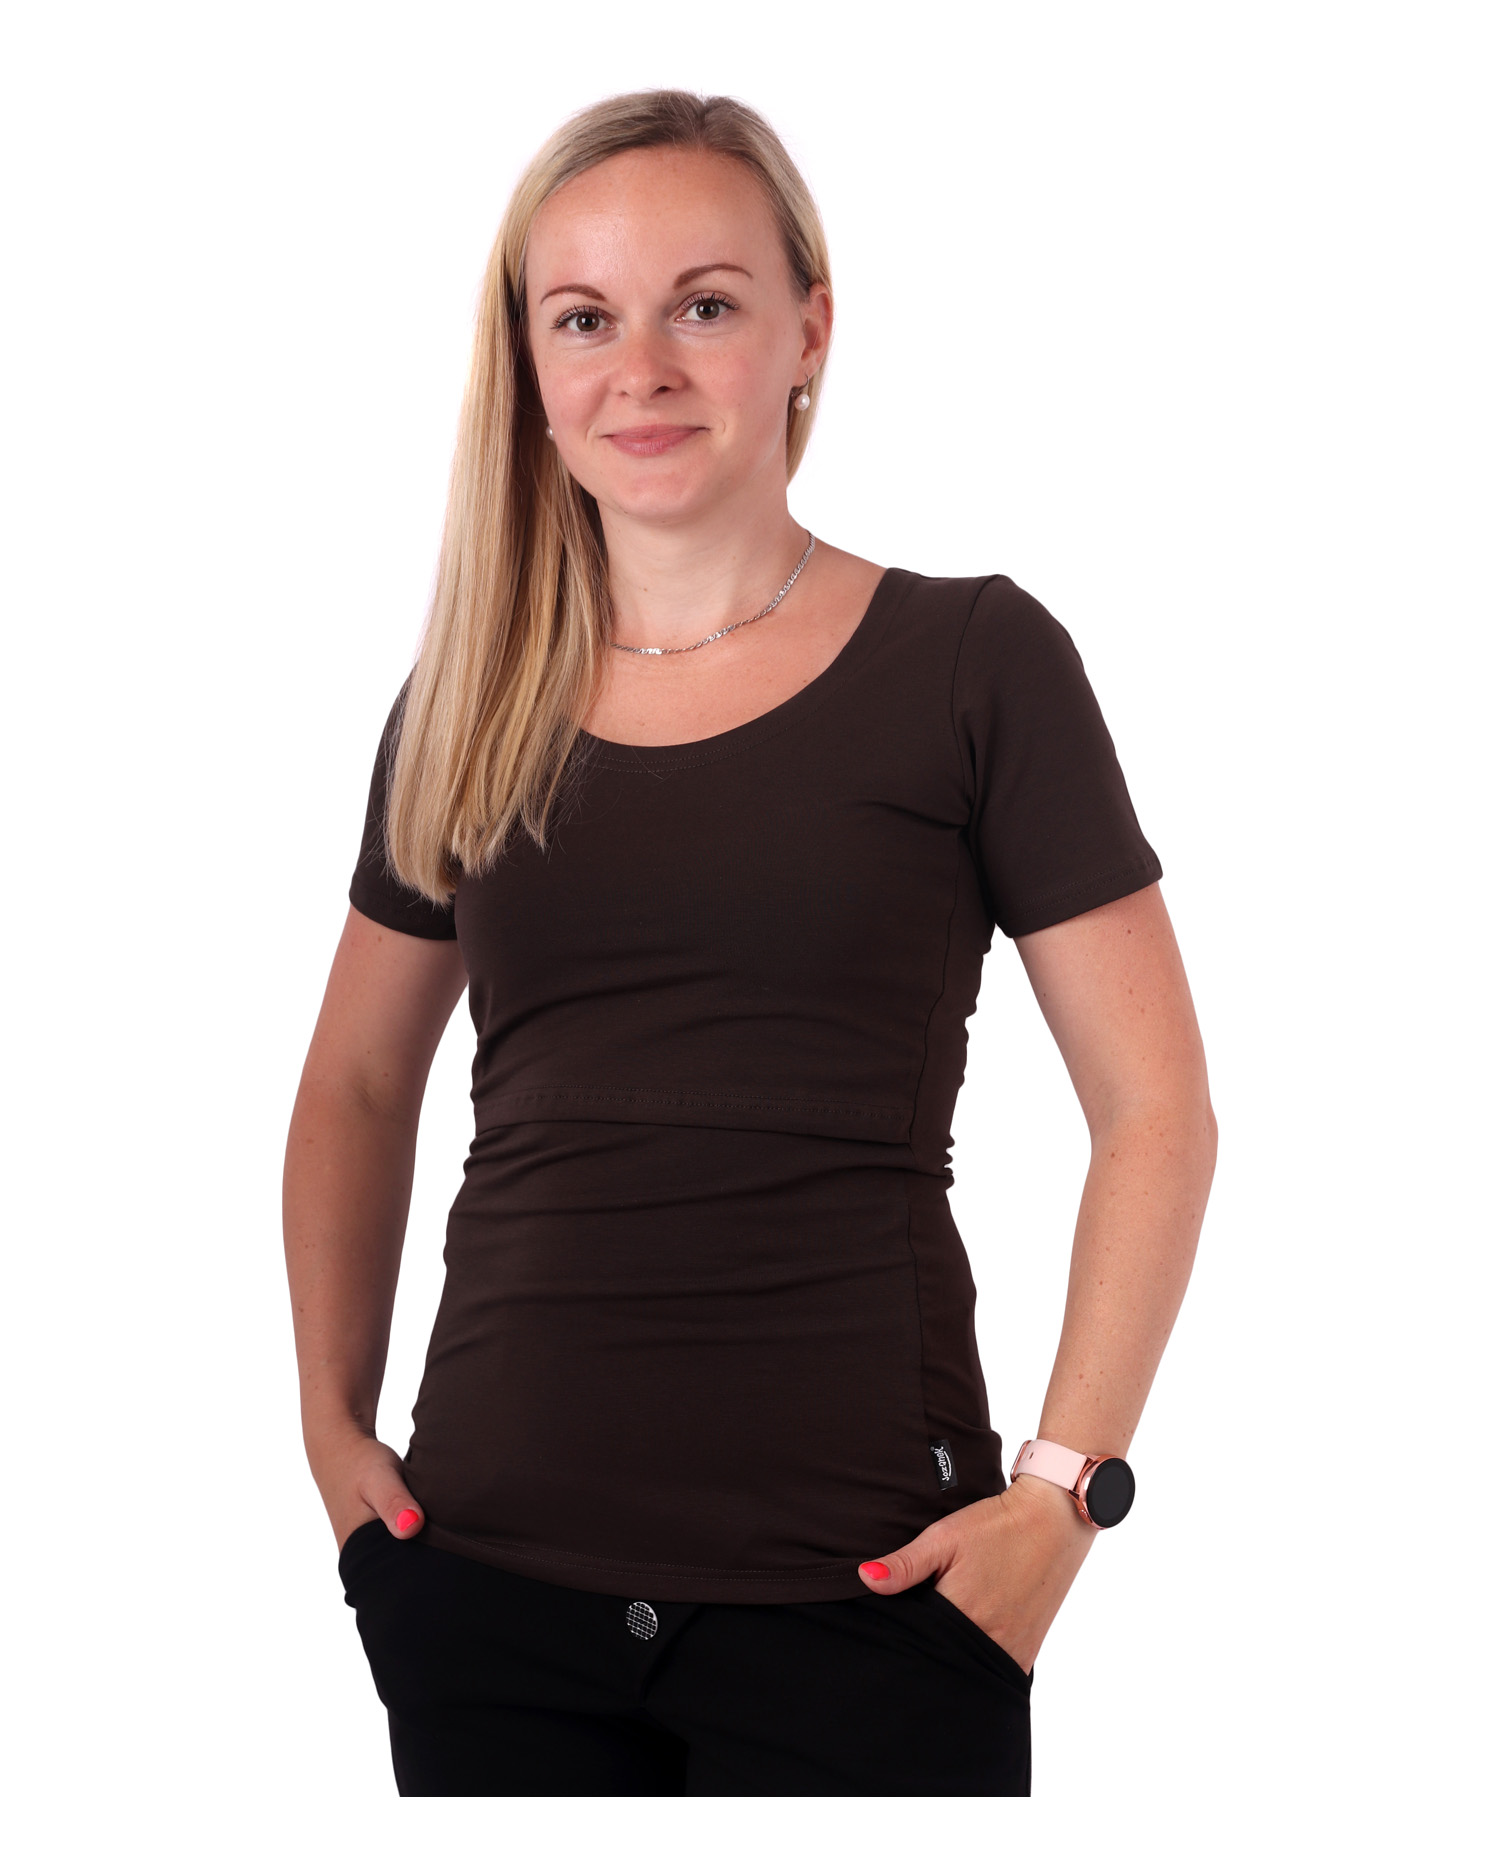 Breast-feeding T-shirt Katerina, short sleeves, CHOCOLATE BROWN